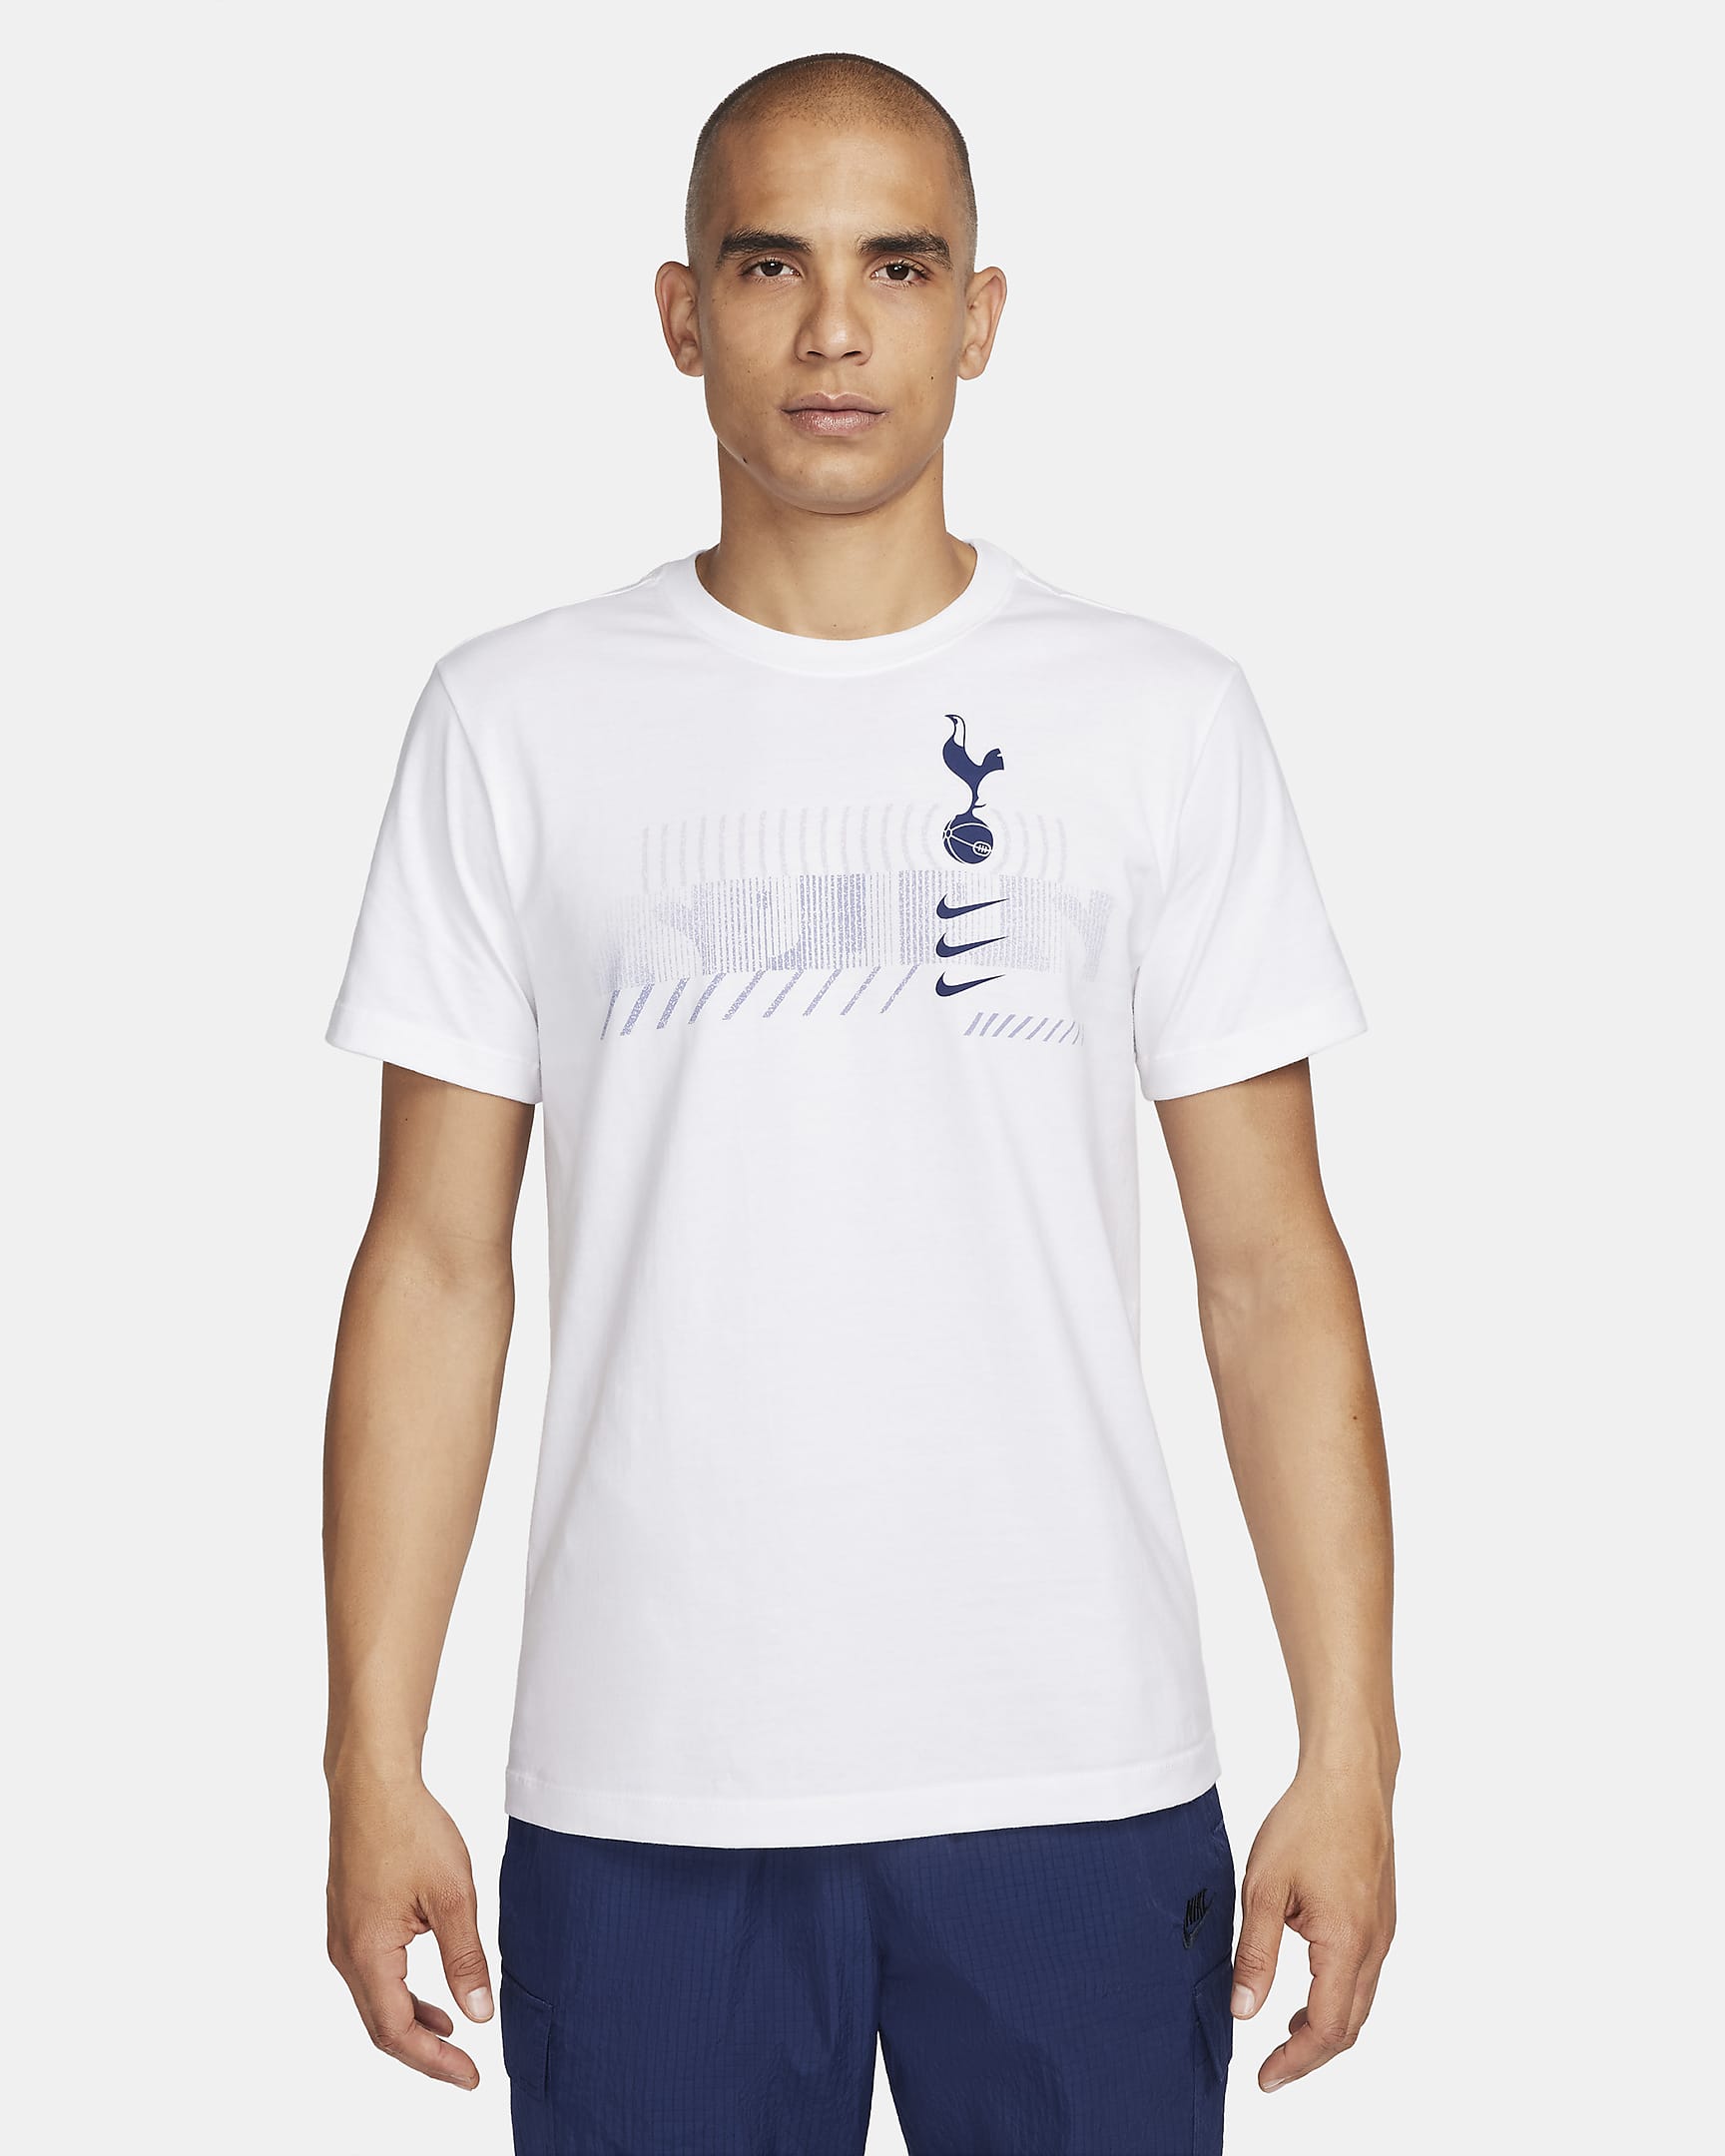 Tottenham Hotspur Men's Nike Soccer T-Shirt. Nike.com